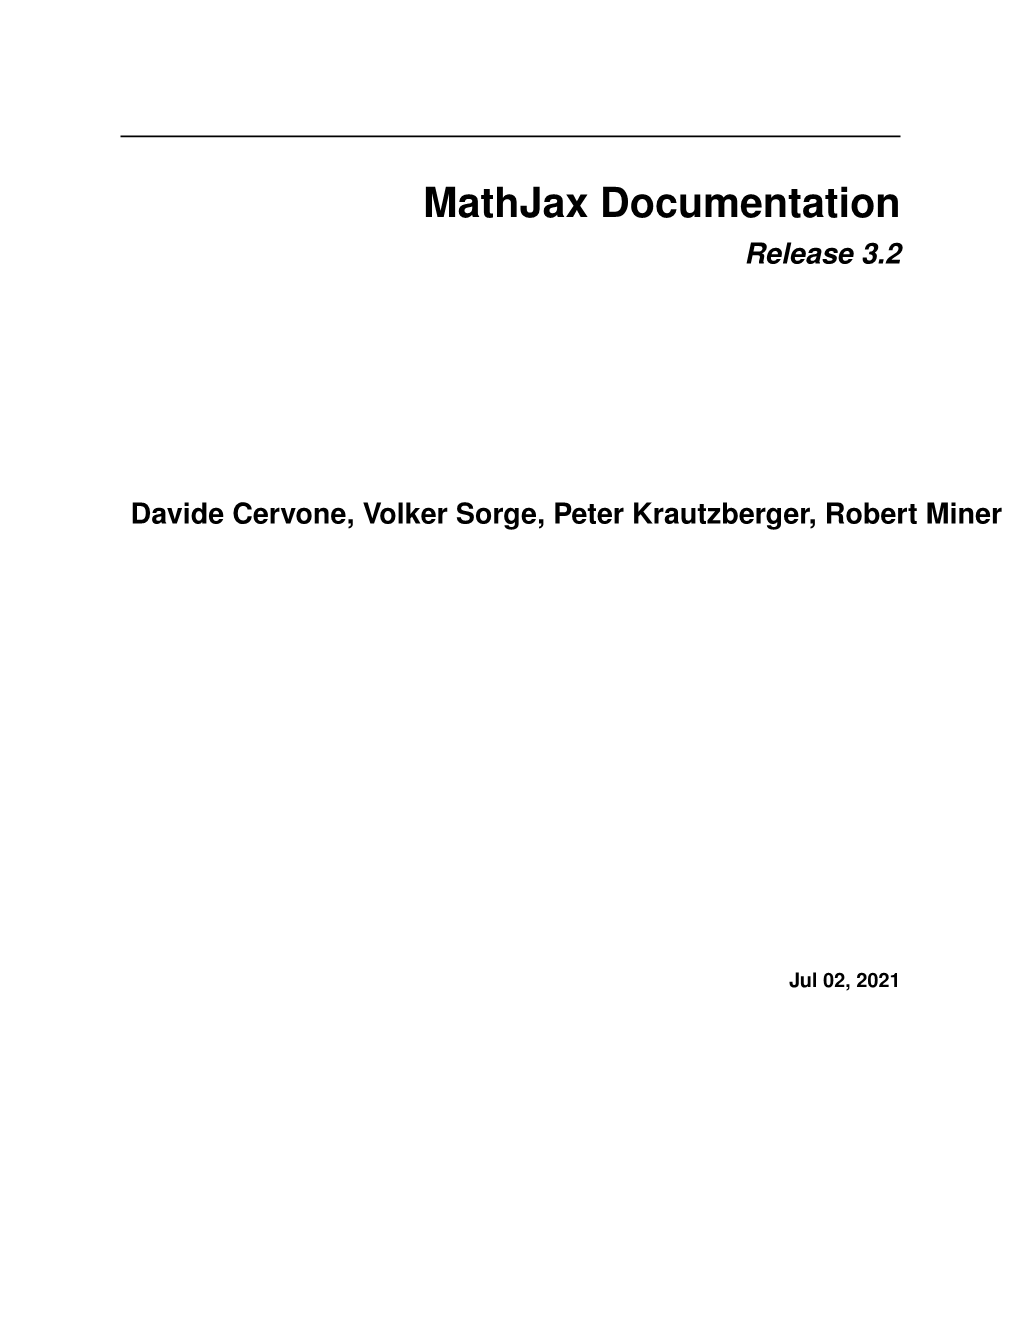 Mathjax Documentation Release 3.2